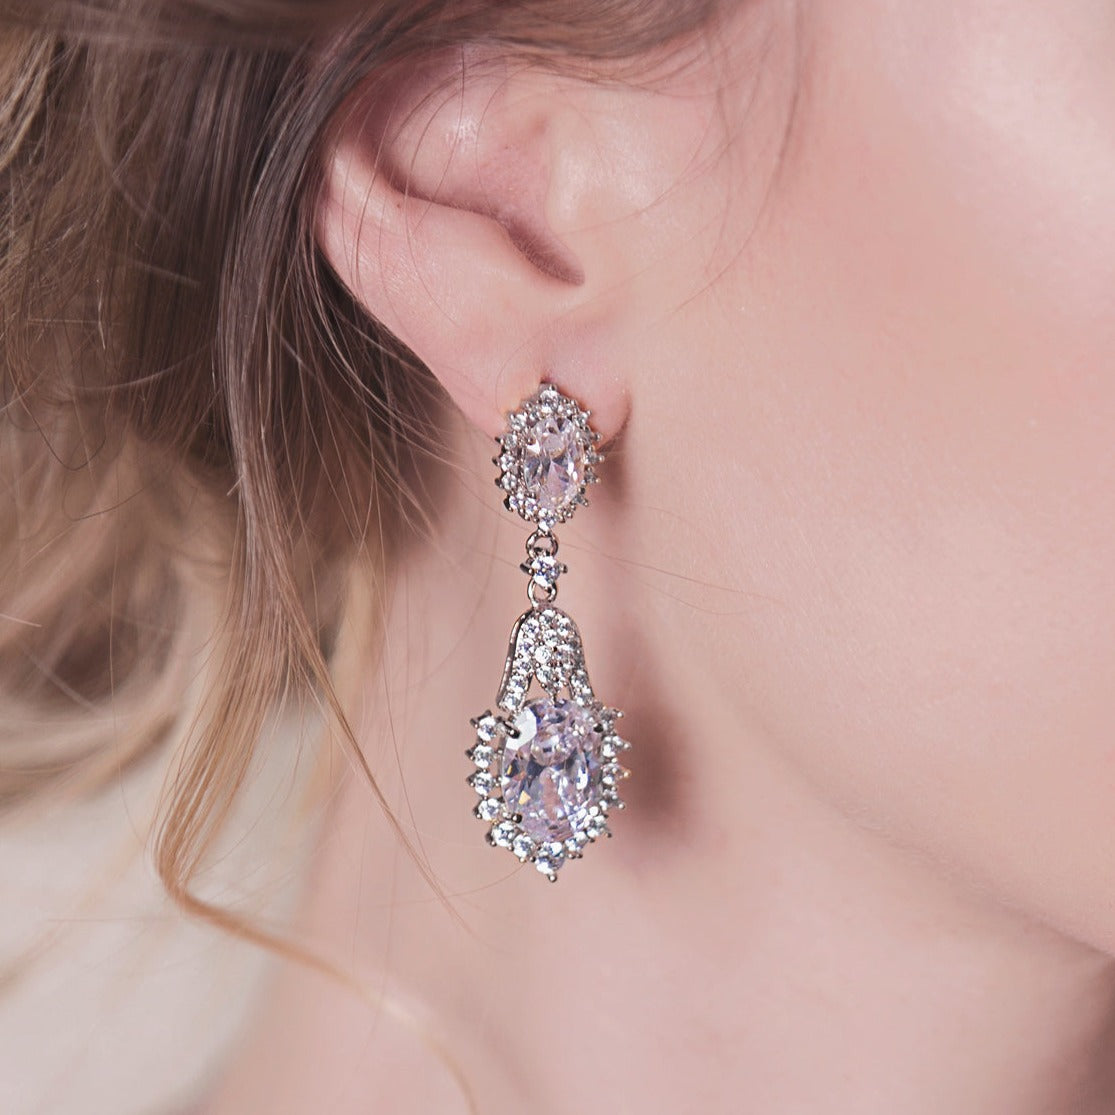 Crystal Drop Earrings | LeightWorks Sterling Silver Crystal Jewelry